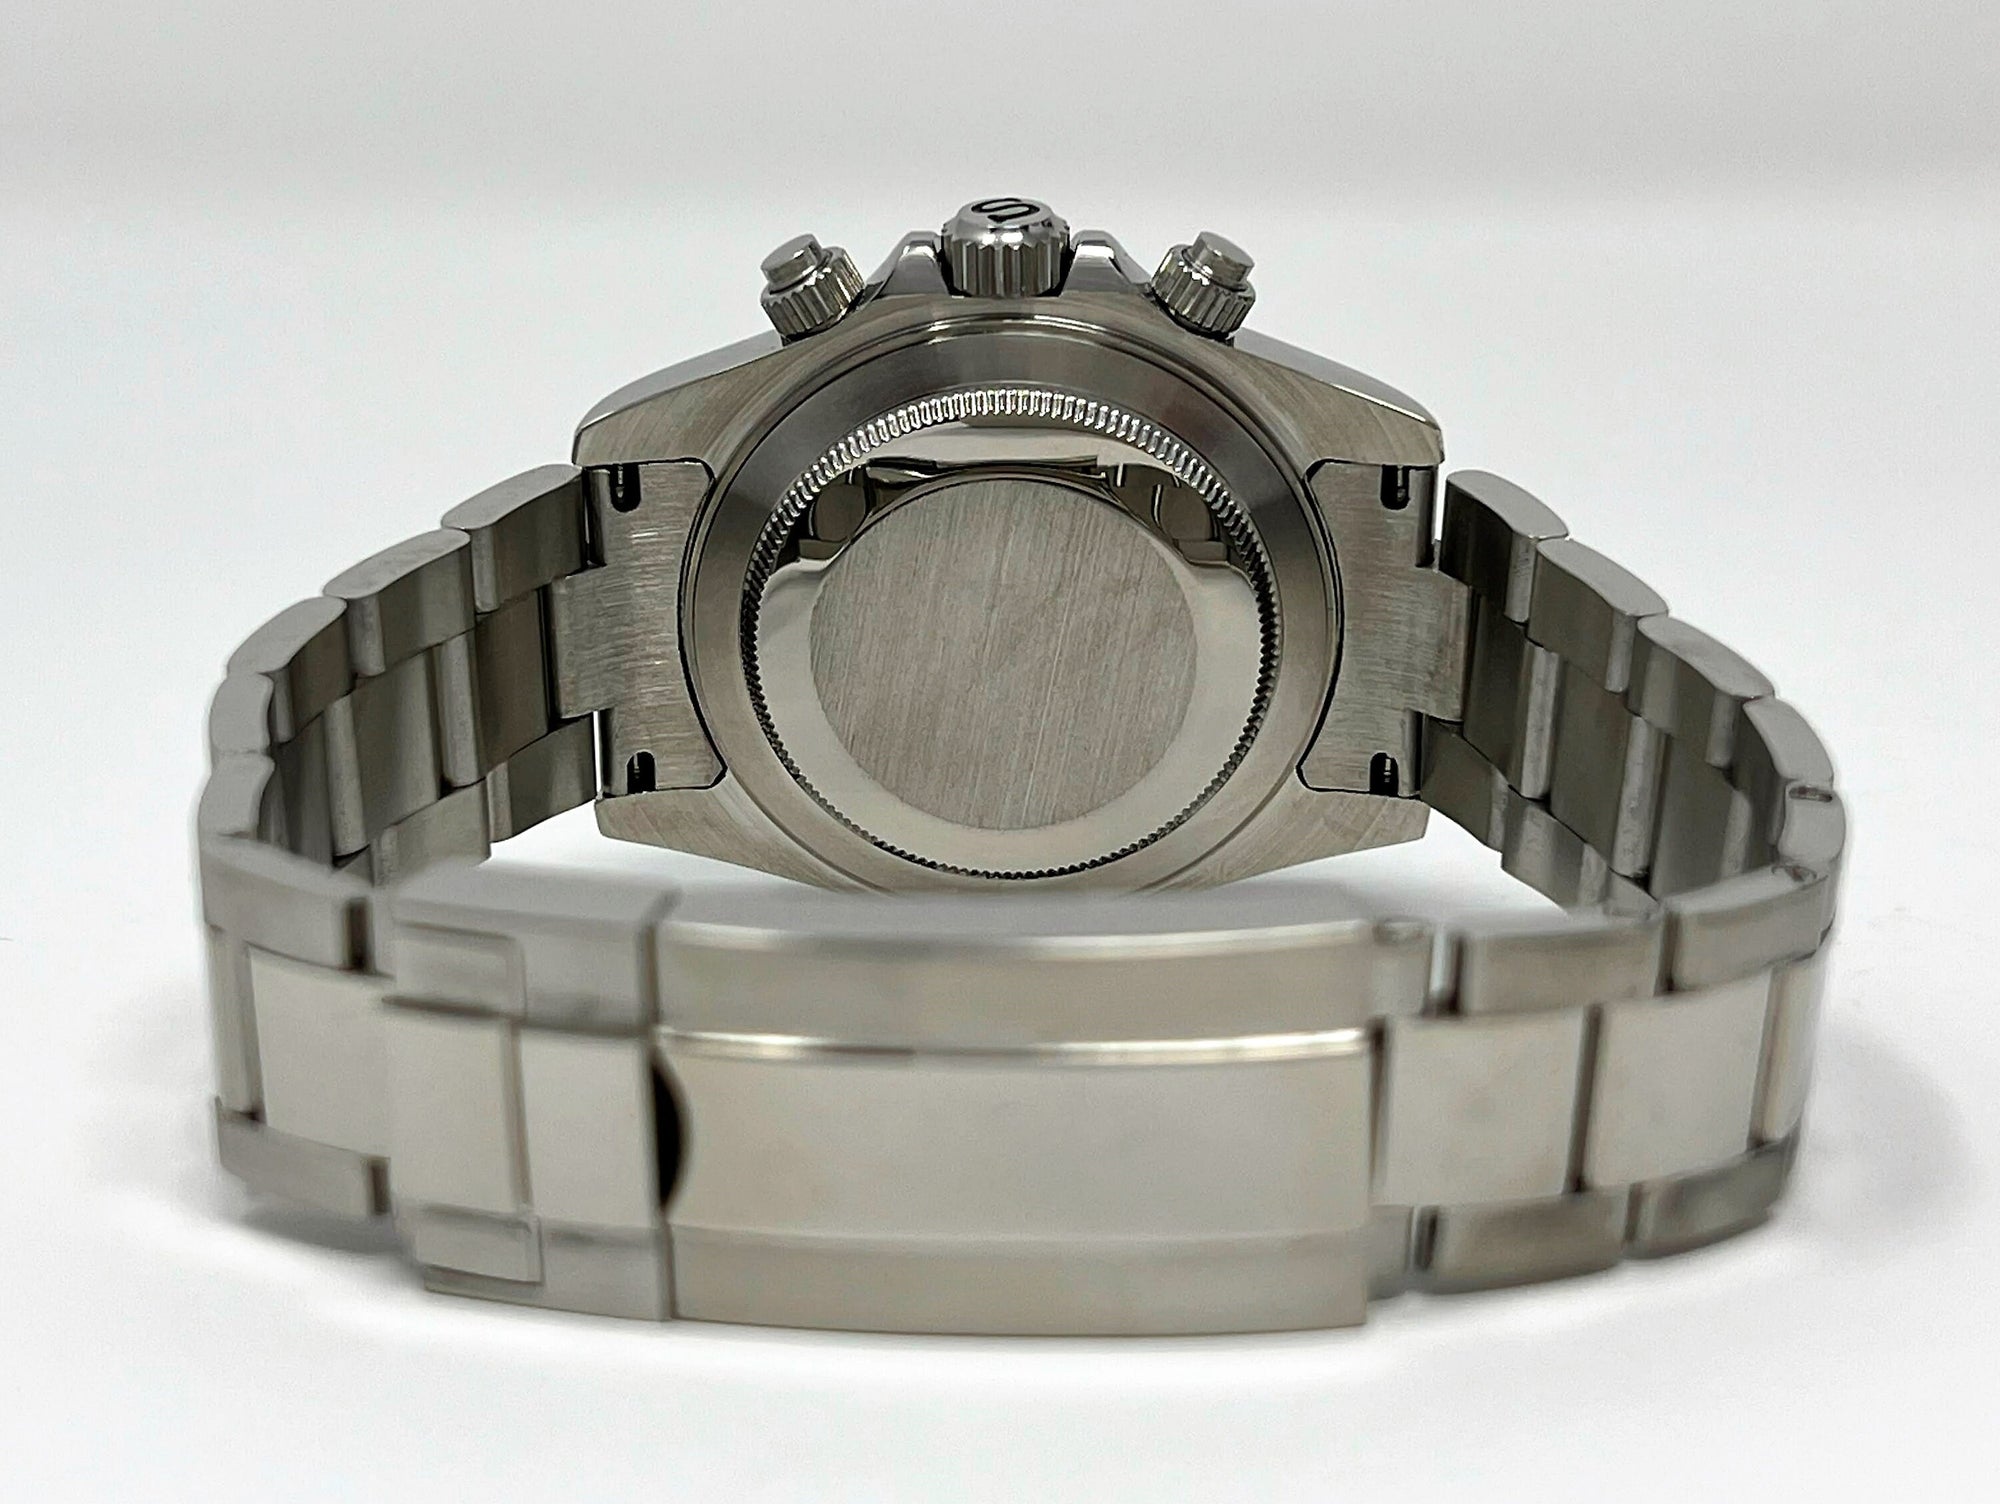 Seiko Daytona 2023 - Luxury Black Chronograph | Chrono | Wristwatch | Mens Watch | Sport Watch | VK63 | Quartz Watch | Cosmograph Automatic